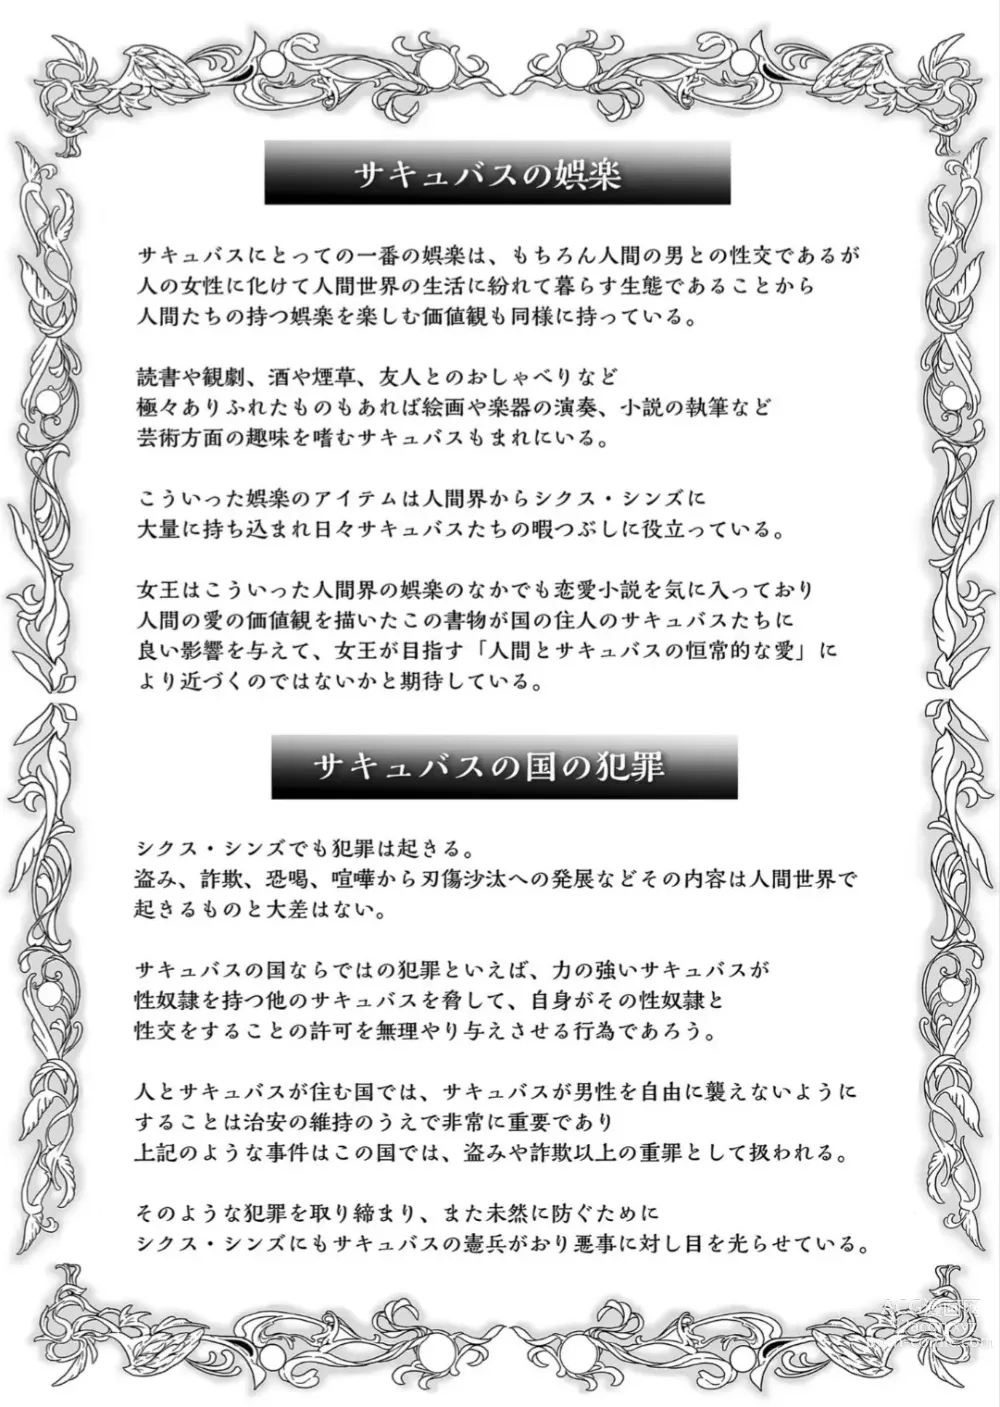 Page 213 of manga Succubus Kingdom